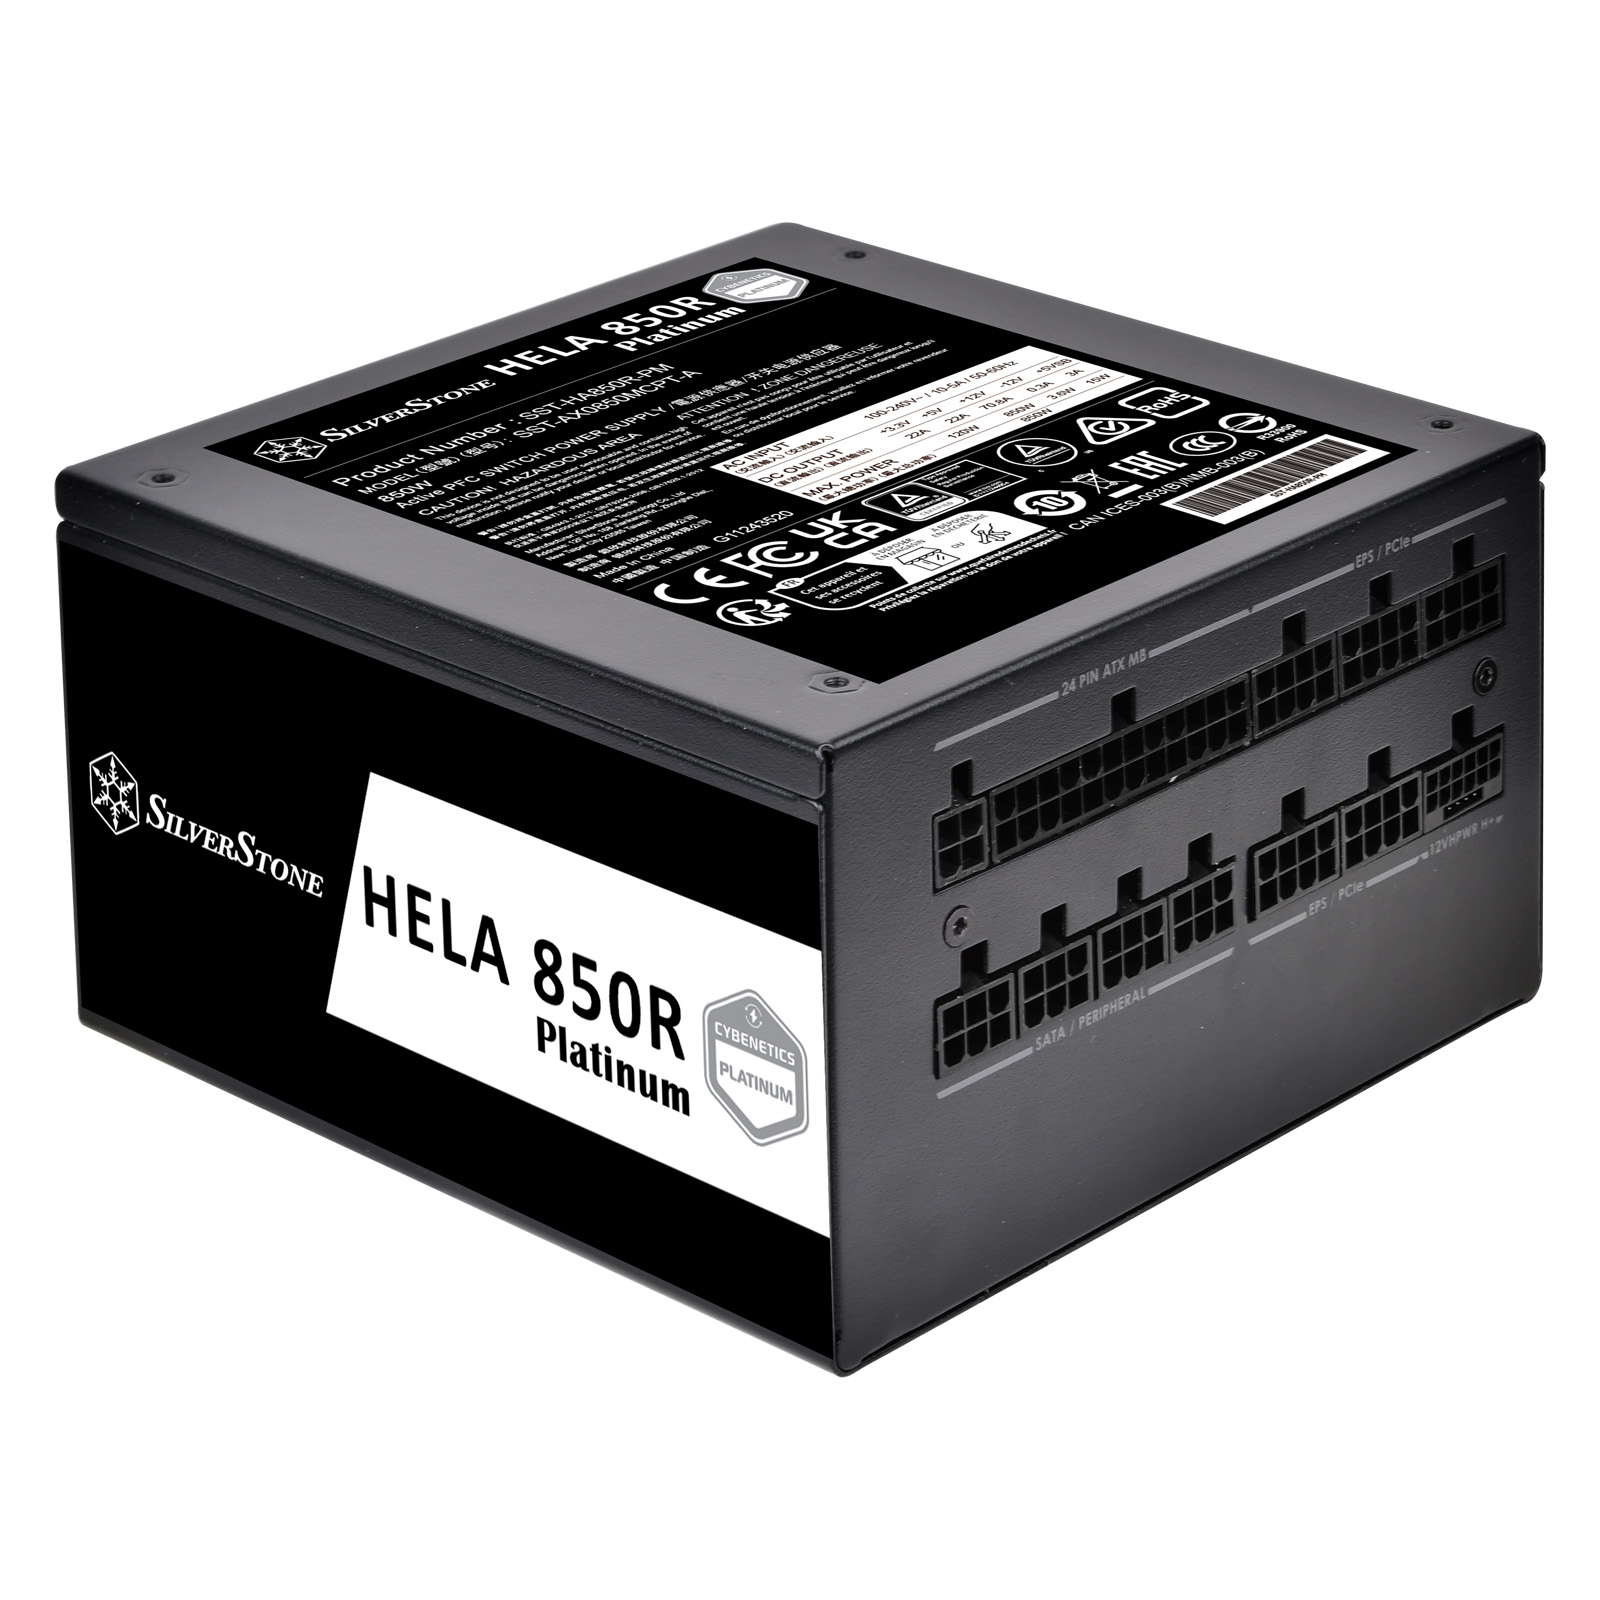 Silverstone - Silverstone HELA 850R 80 Plus Platinum PCIe 5.0 Modular Power Supply